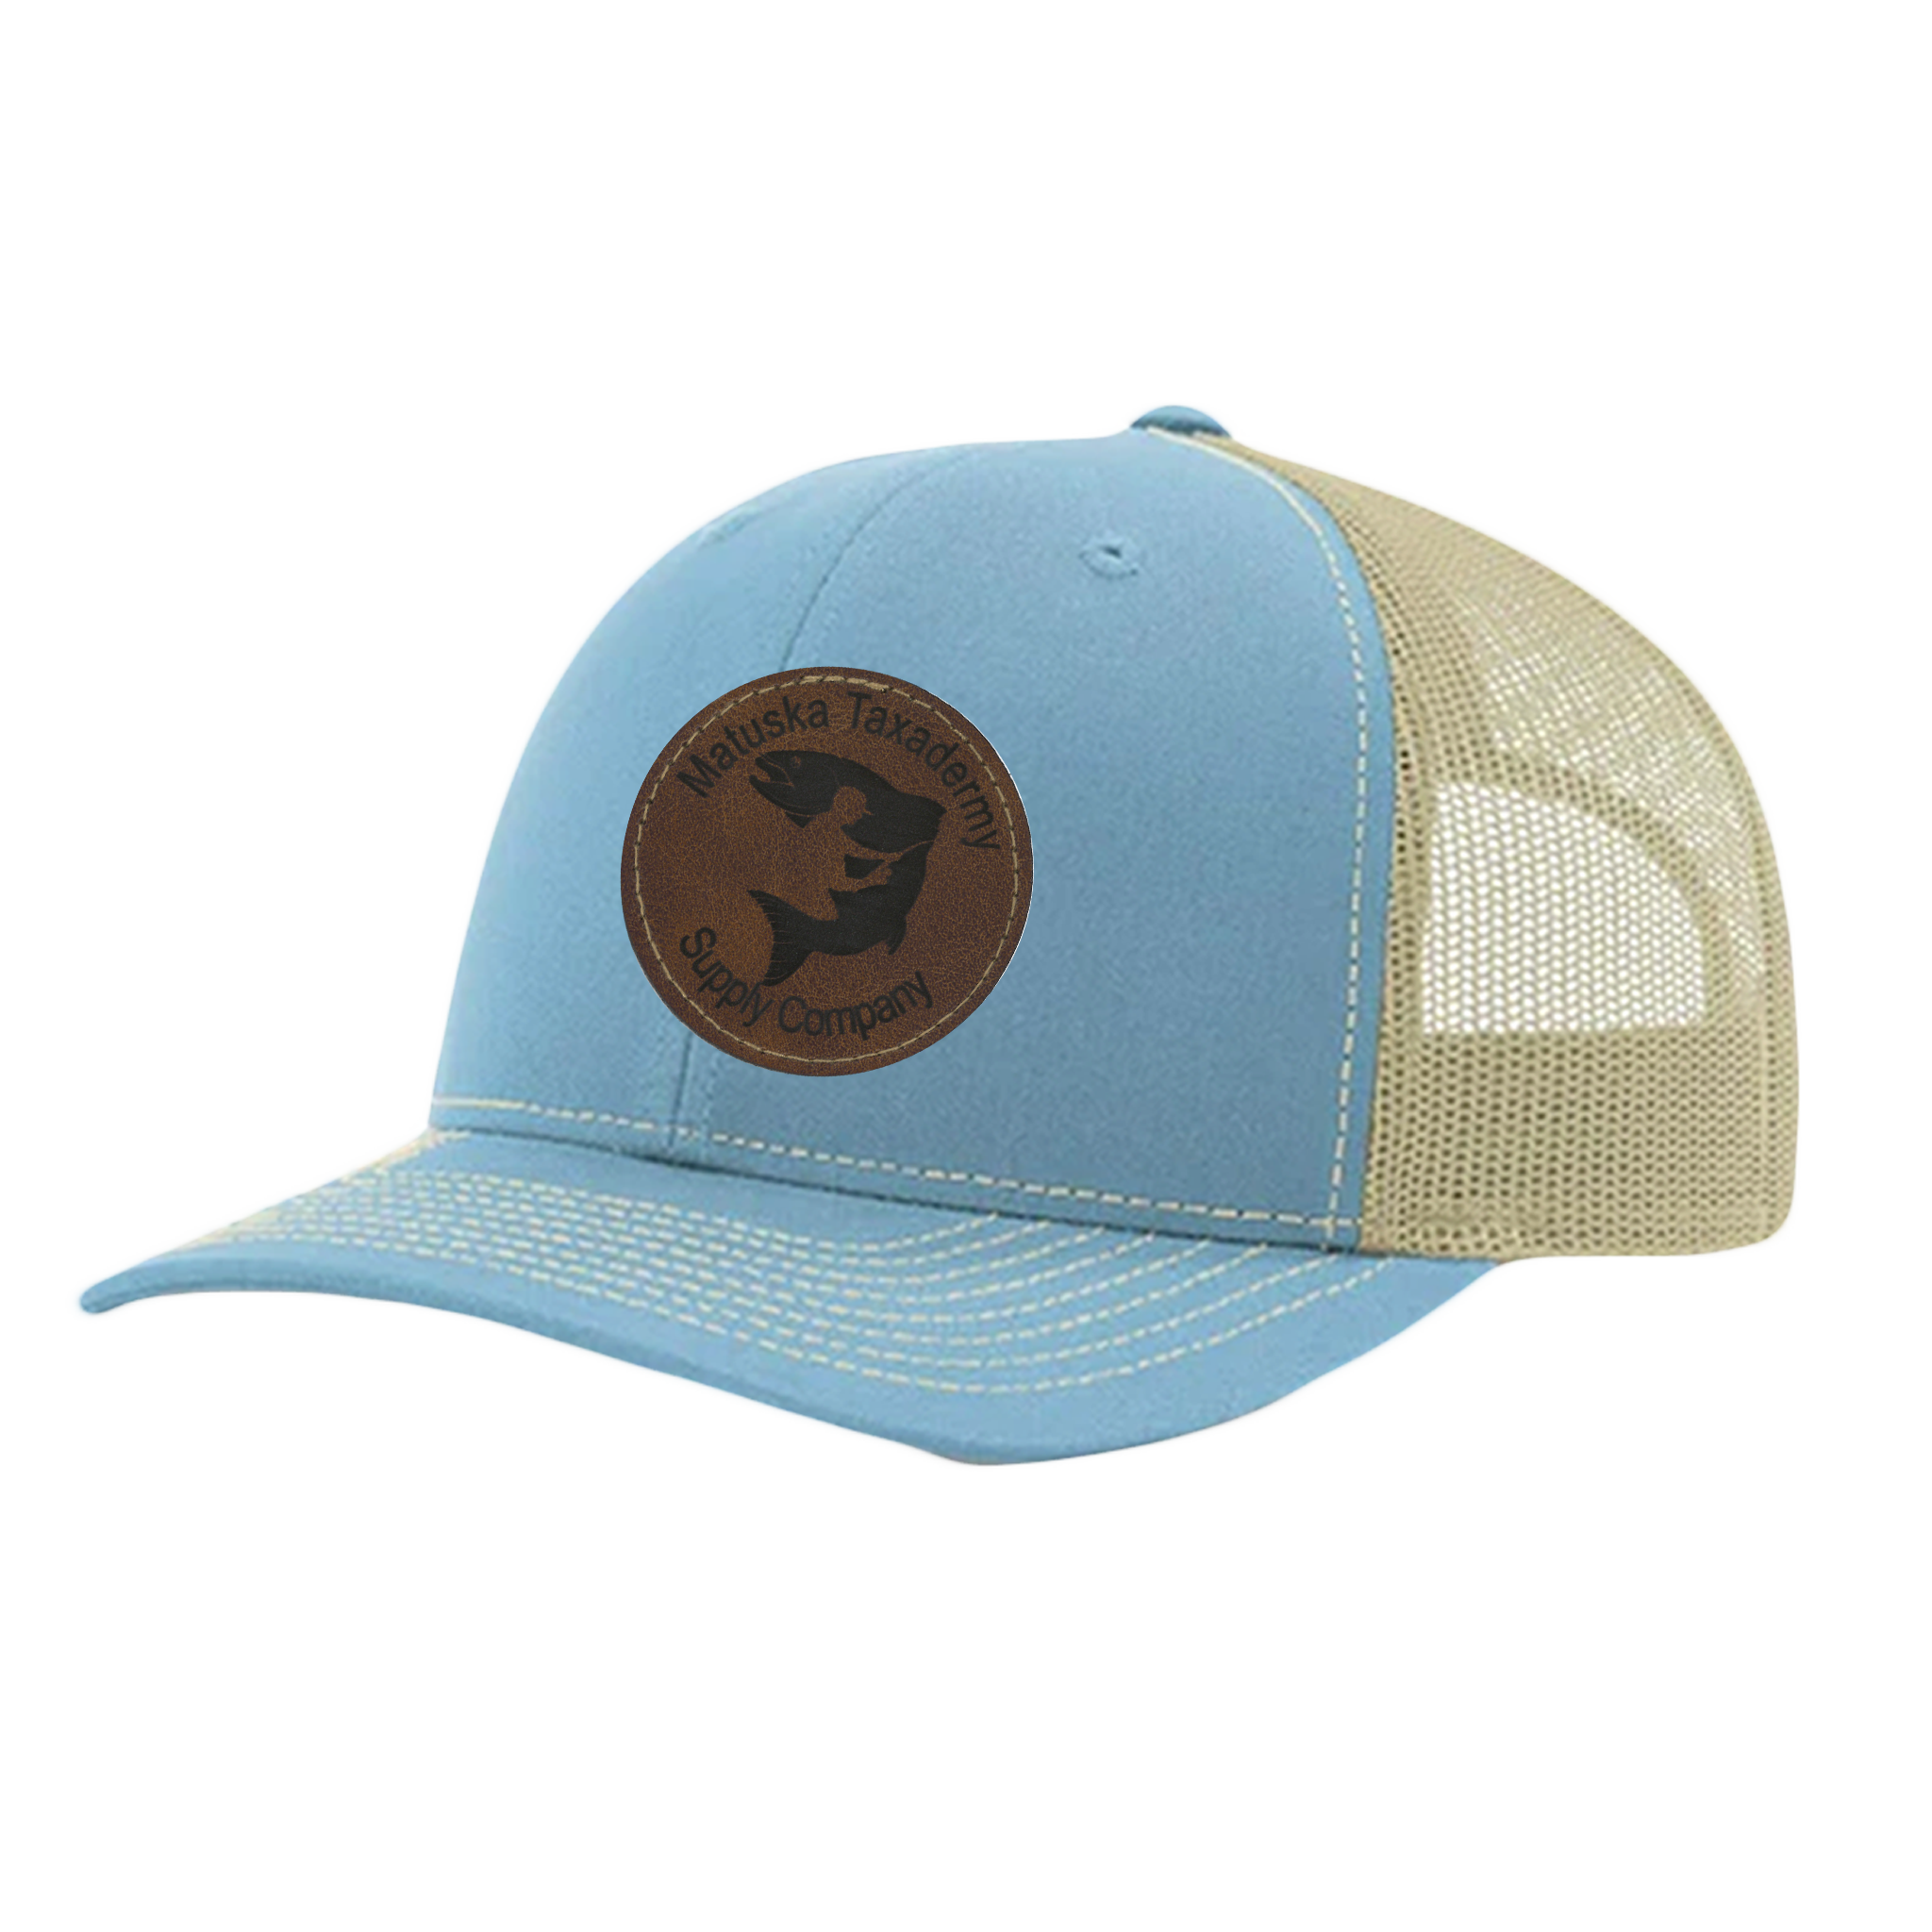 Adjustable Trucker Hat - Light Blue & Tan (Fish Patch)